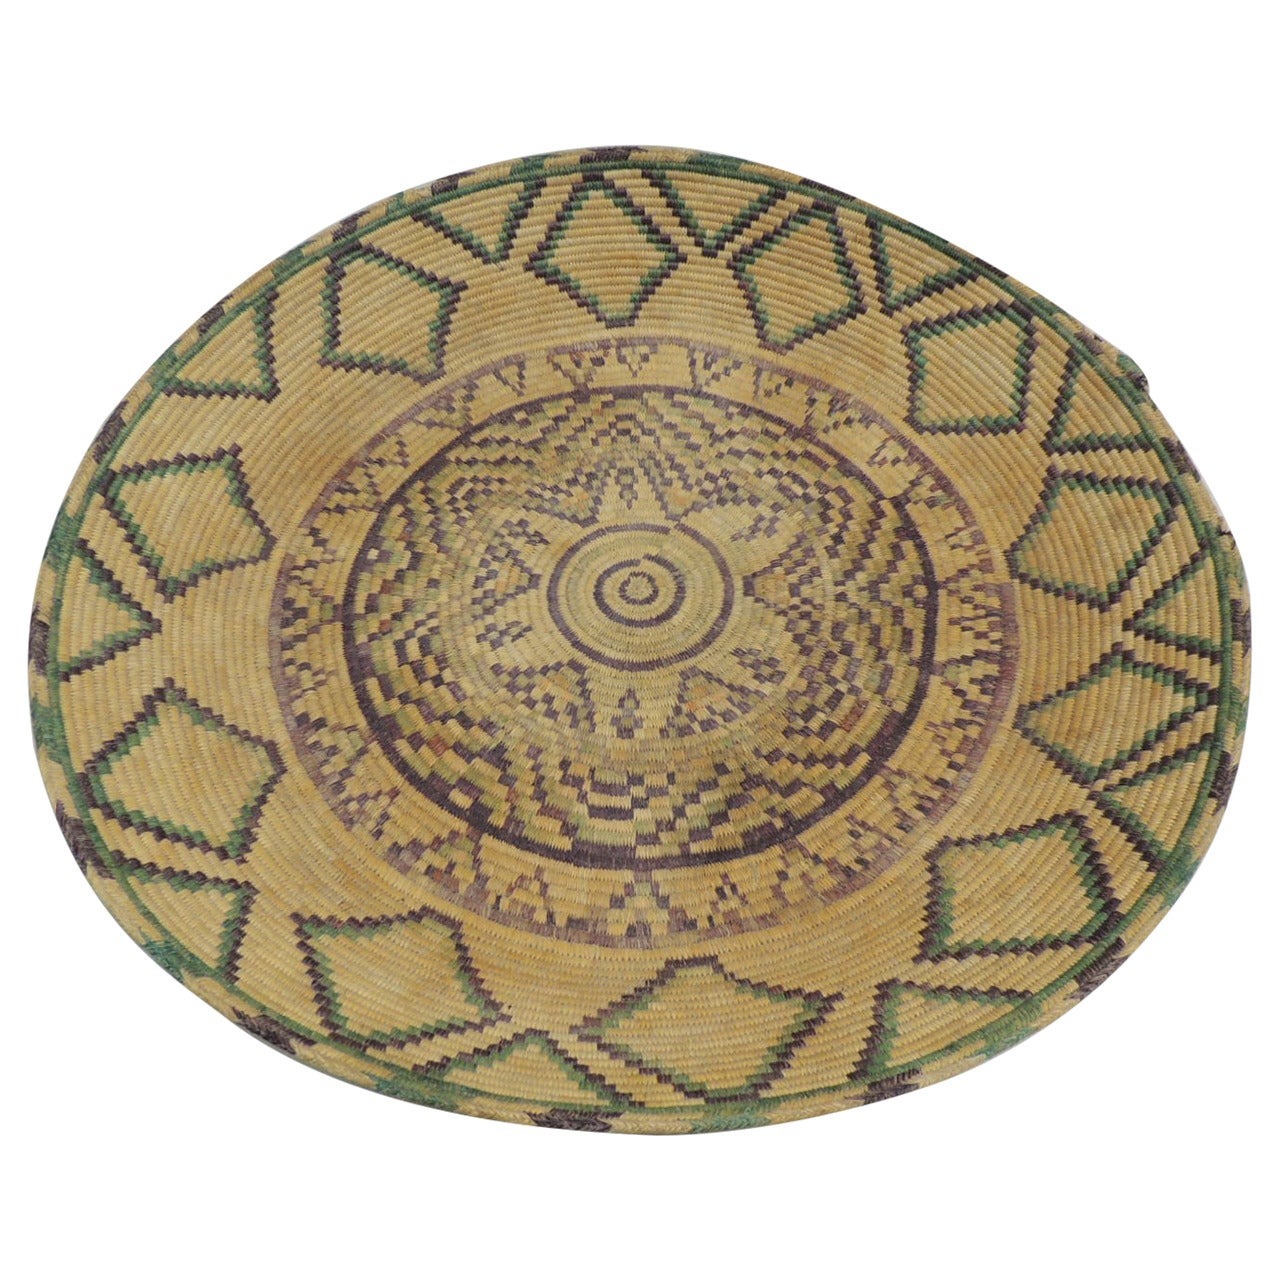 Large Round Artisanal Basket with Geometric Tribal Design